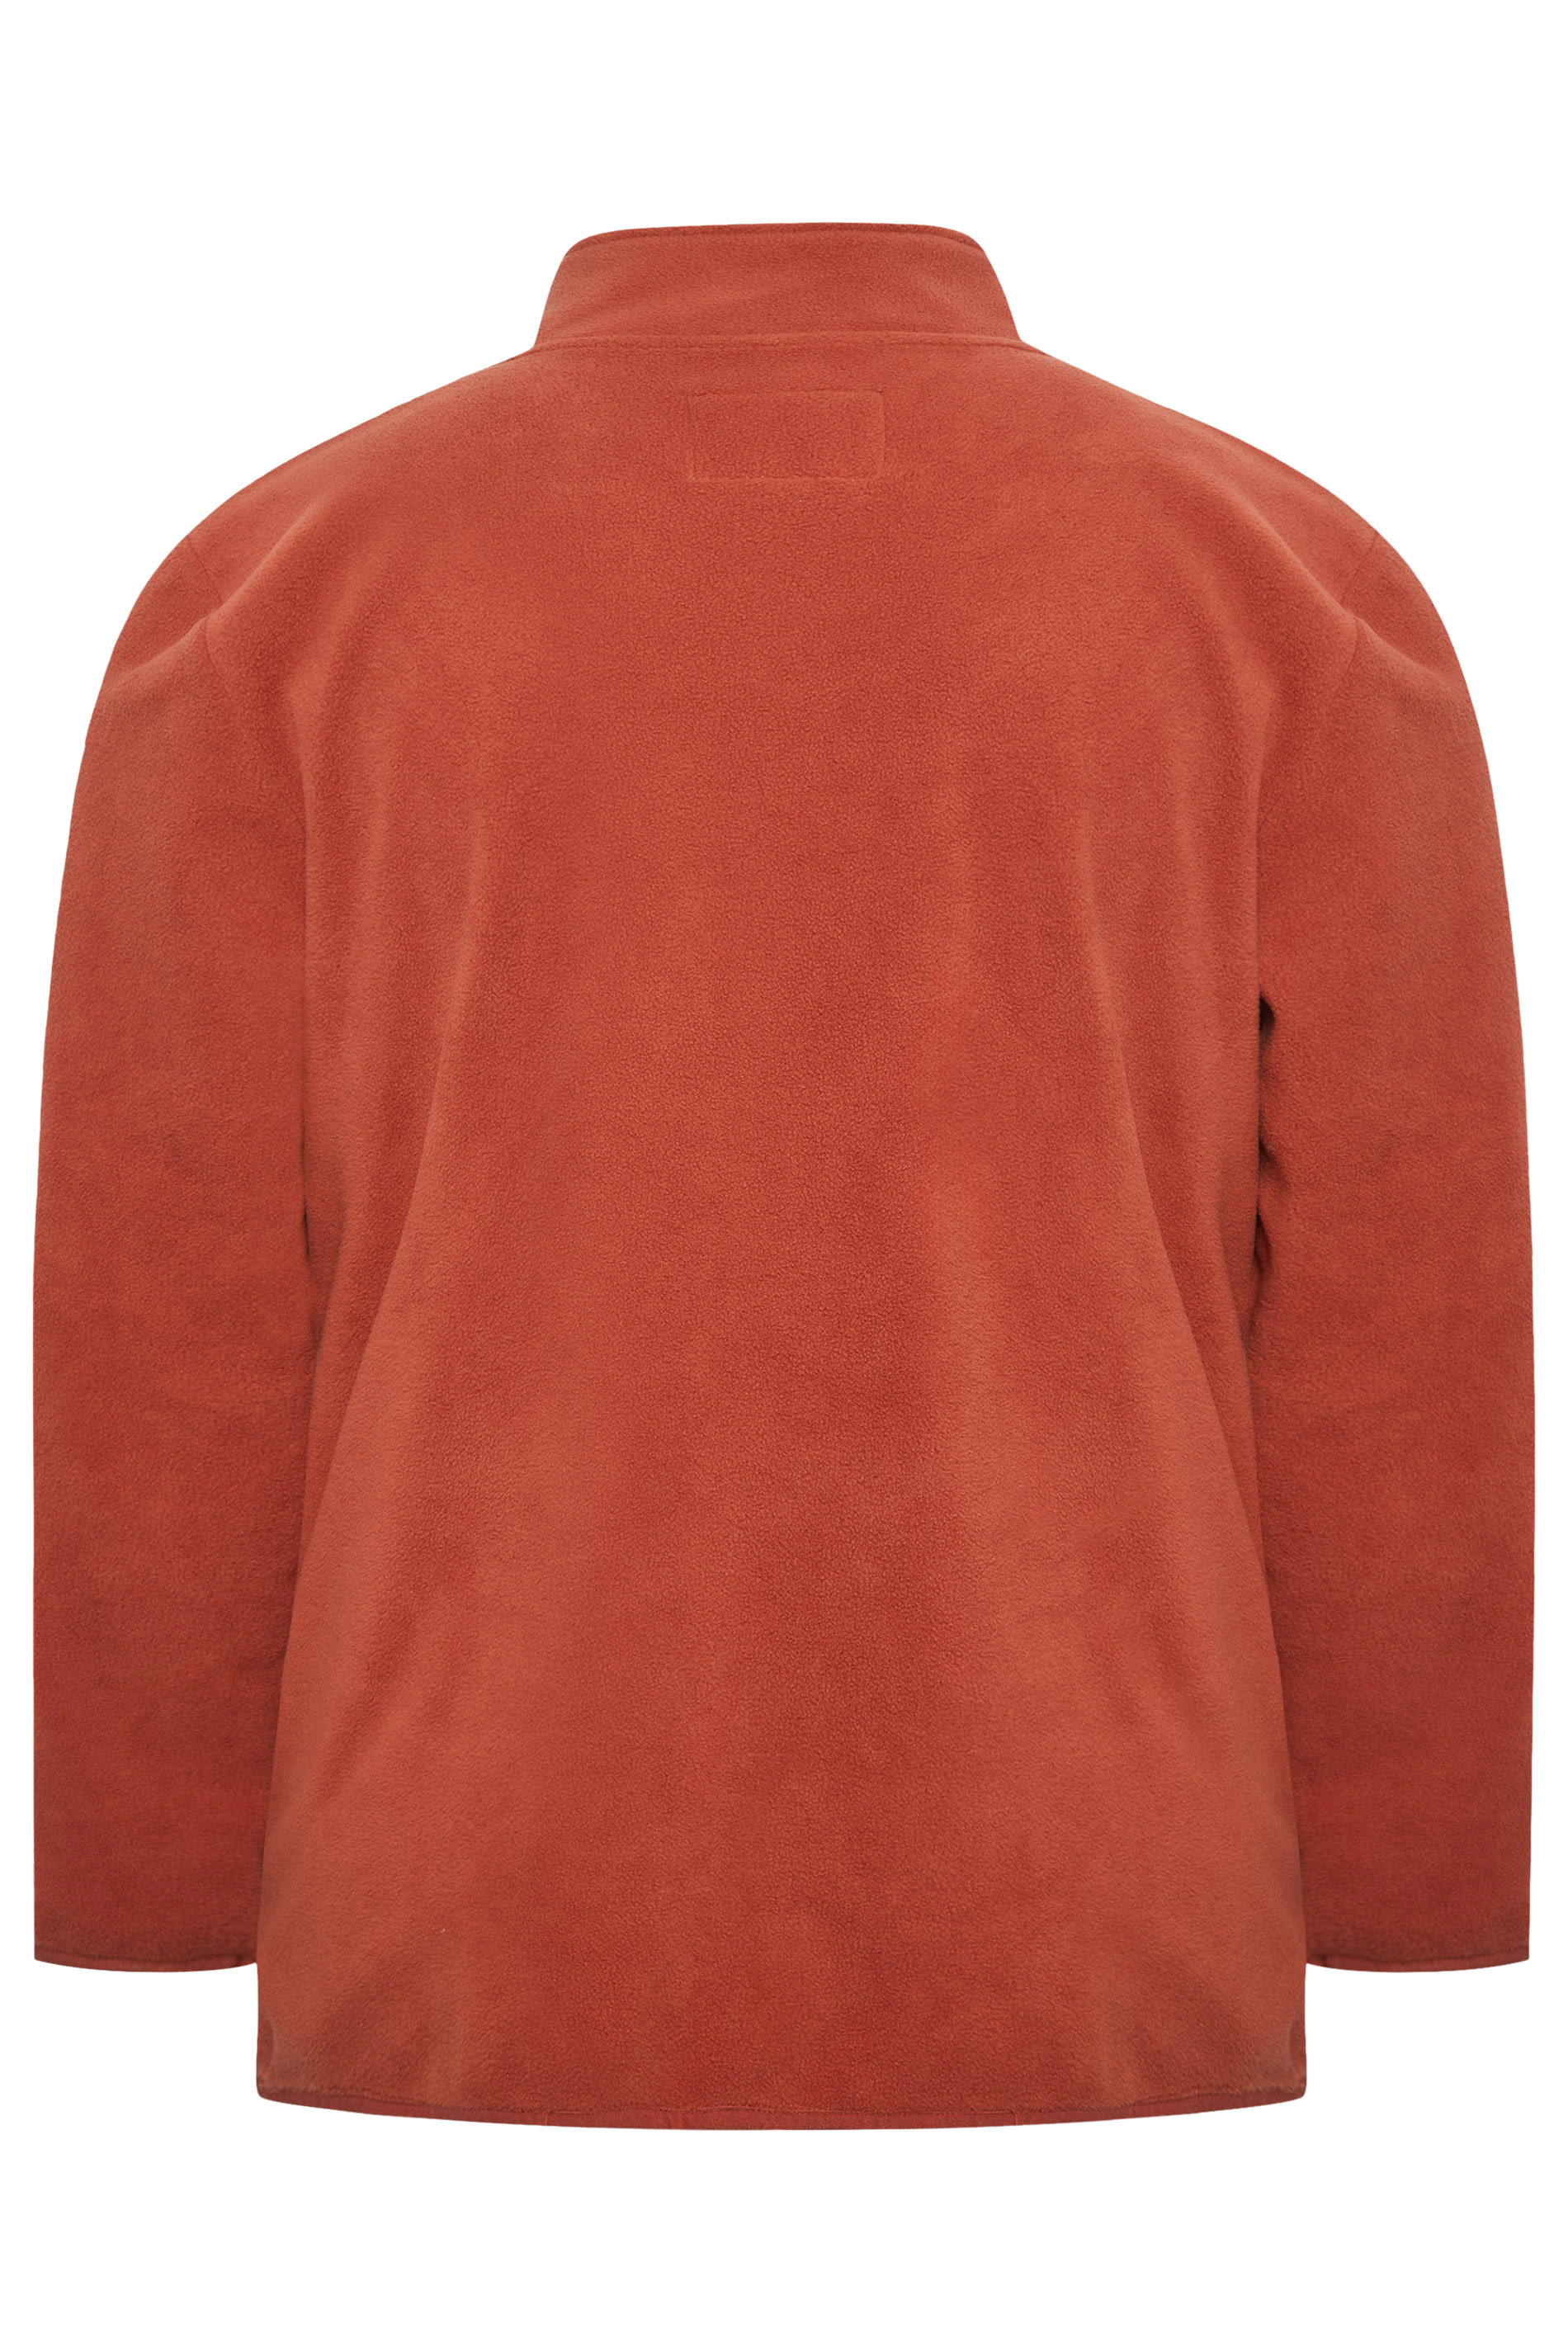 BadRhino Big & Tall Orange Essential Zip Through Fleece | BadRhino 3